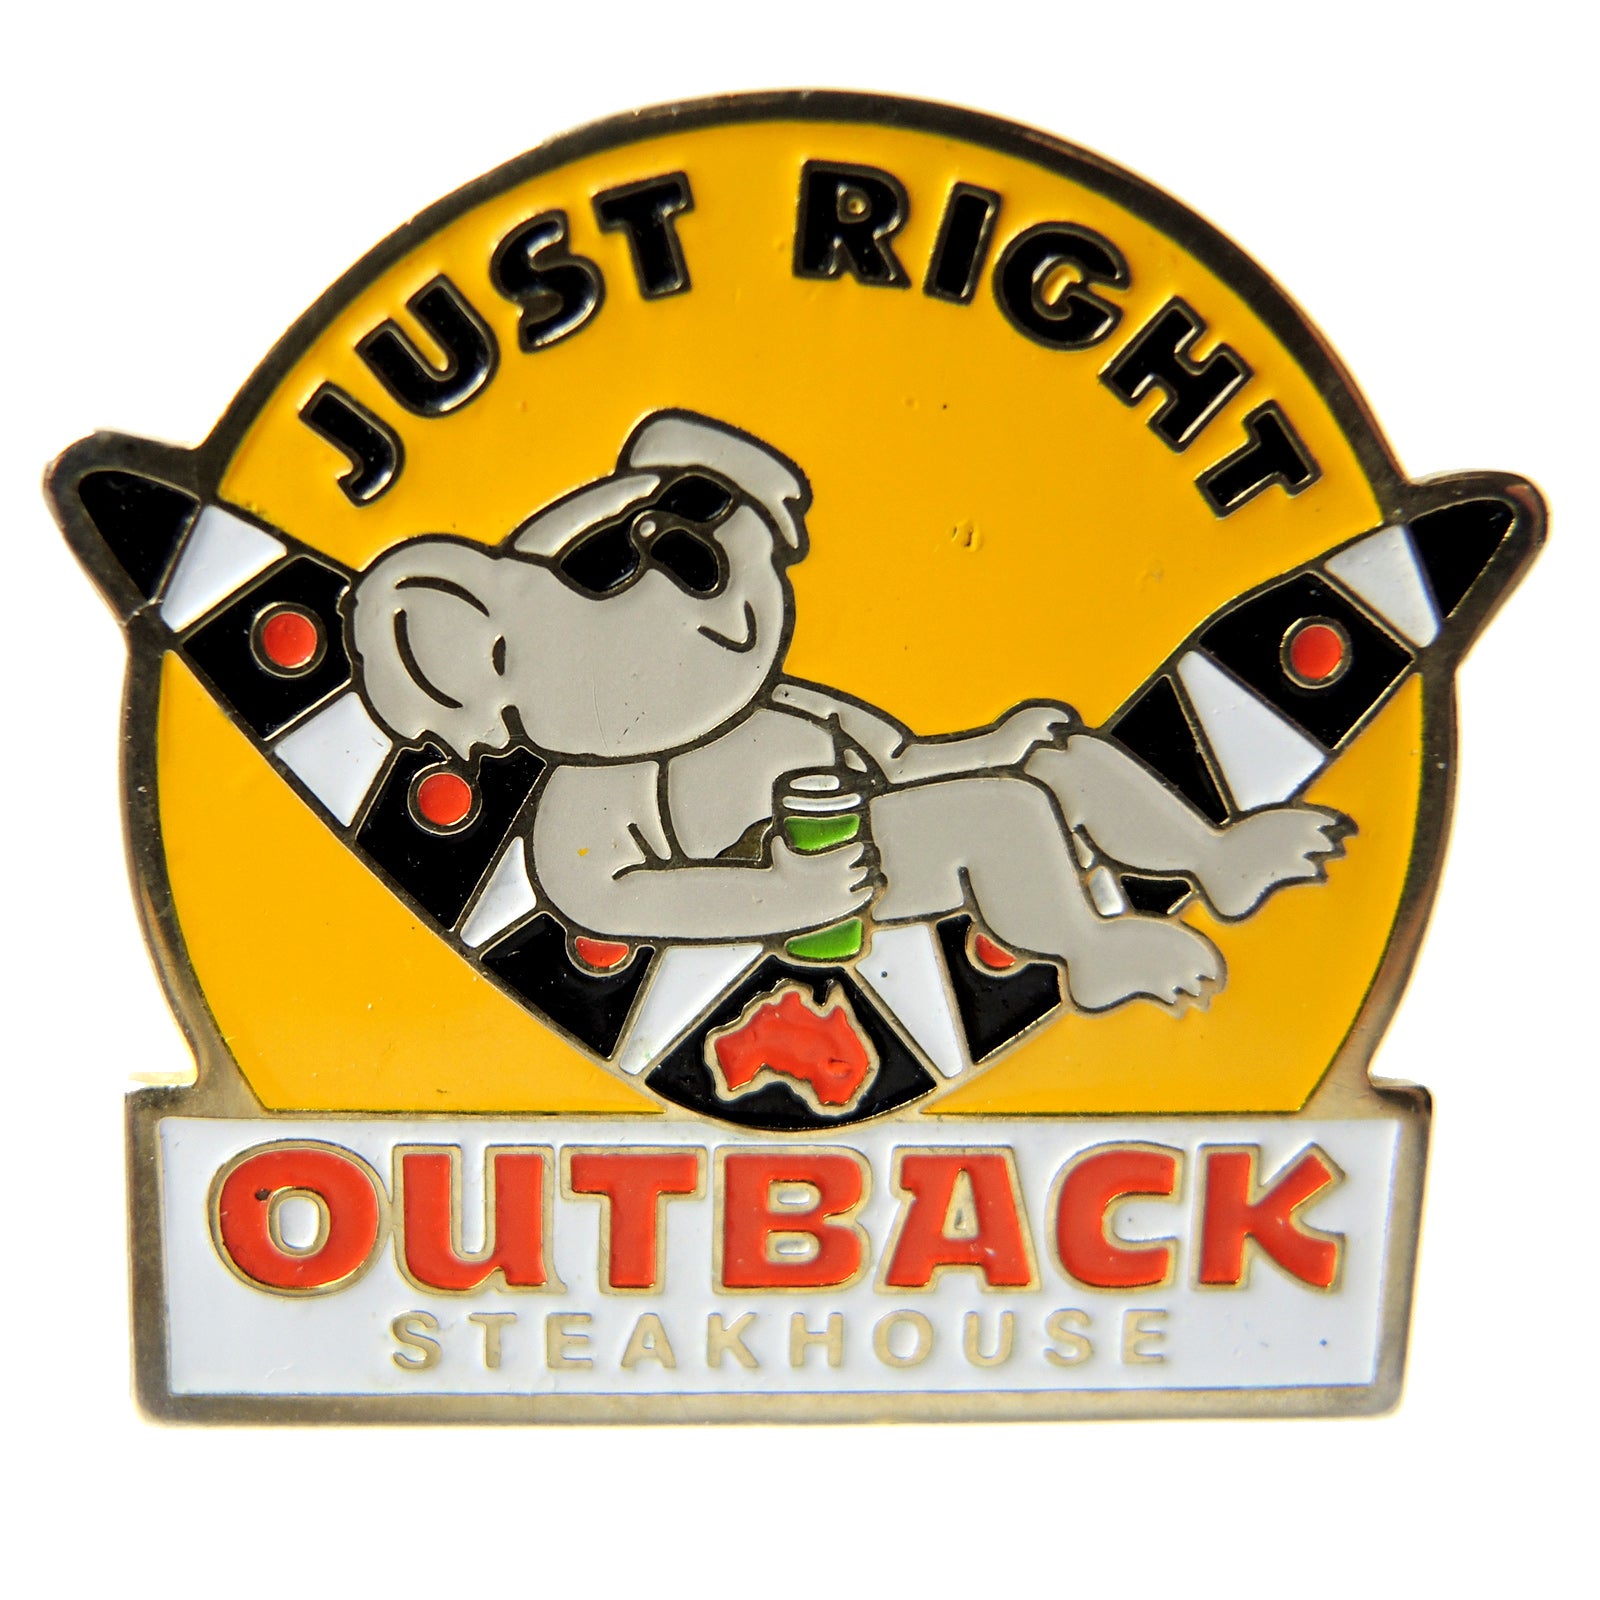 outback steakhouse logo